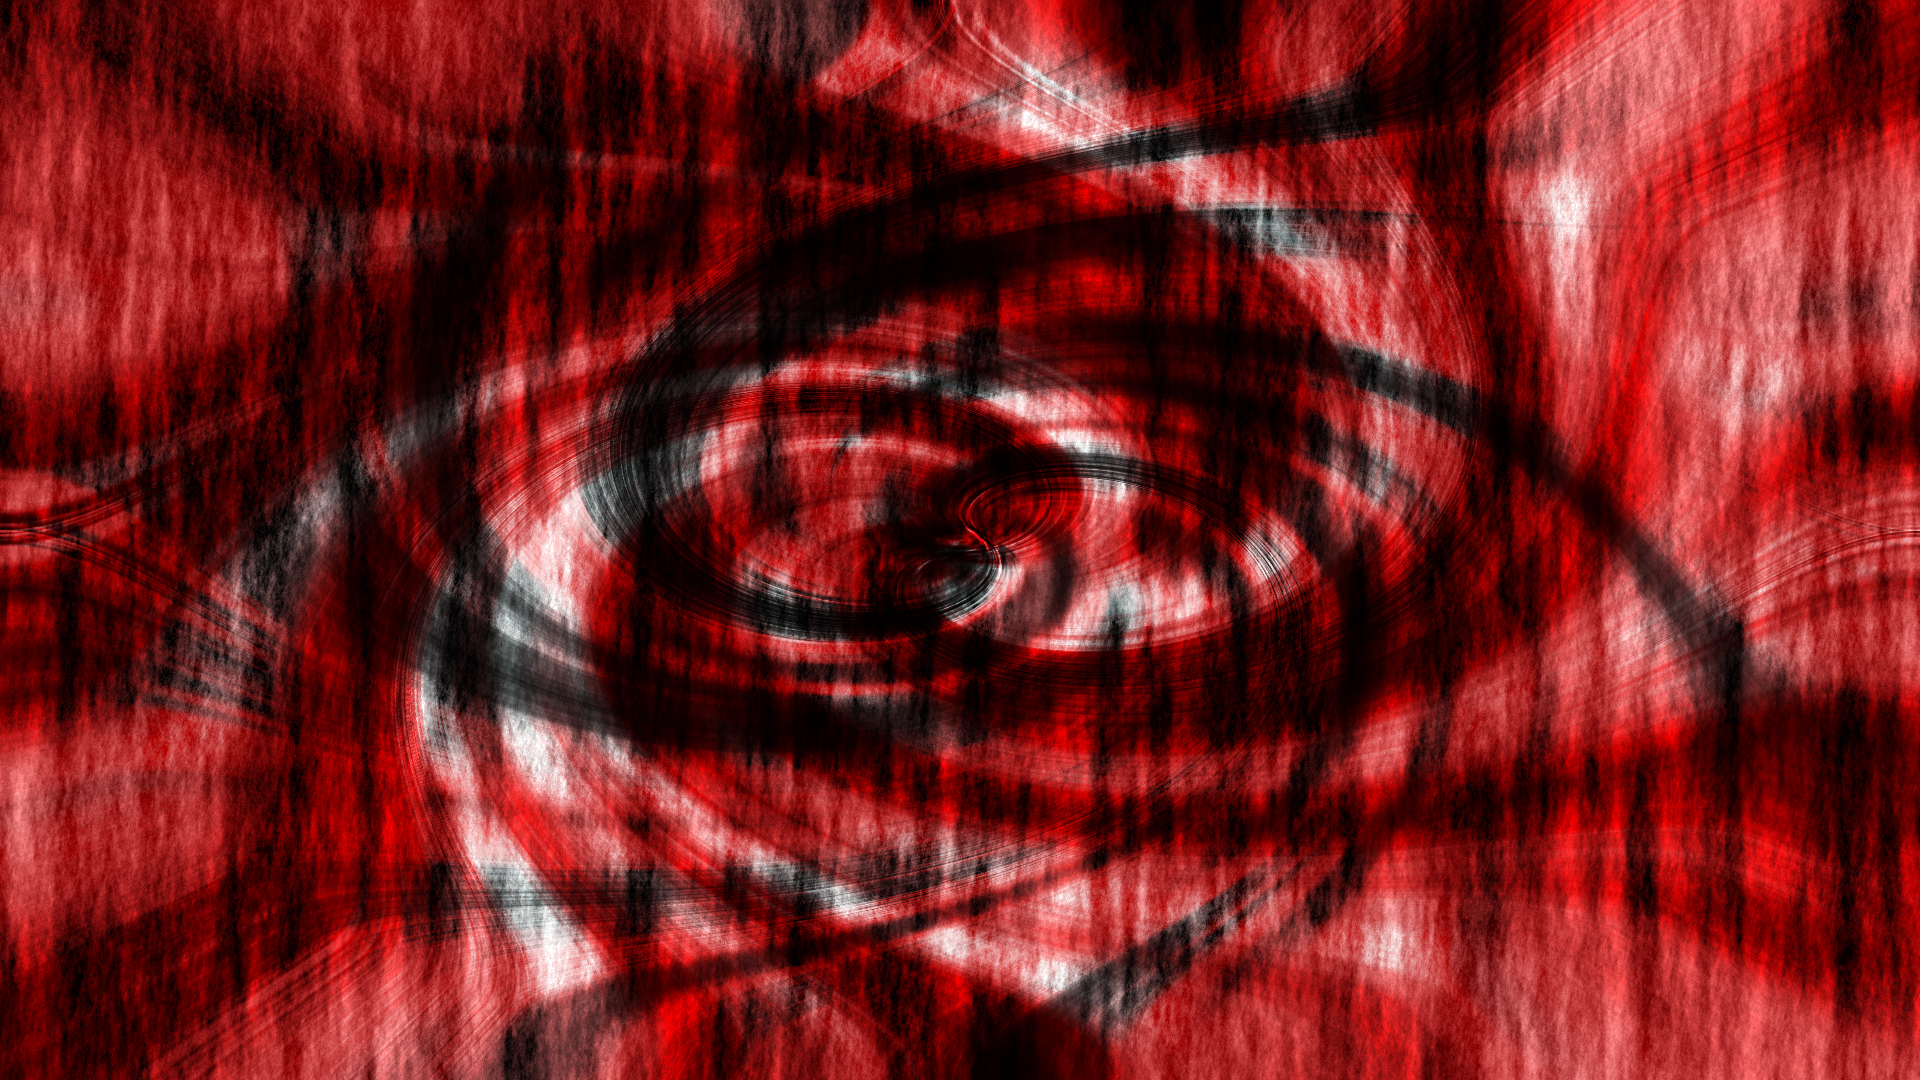 Abstract red vortex against a dark background, capturing an intense and mysterious black vortex.